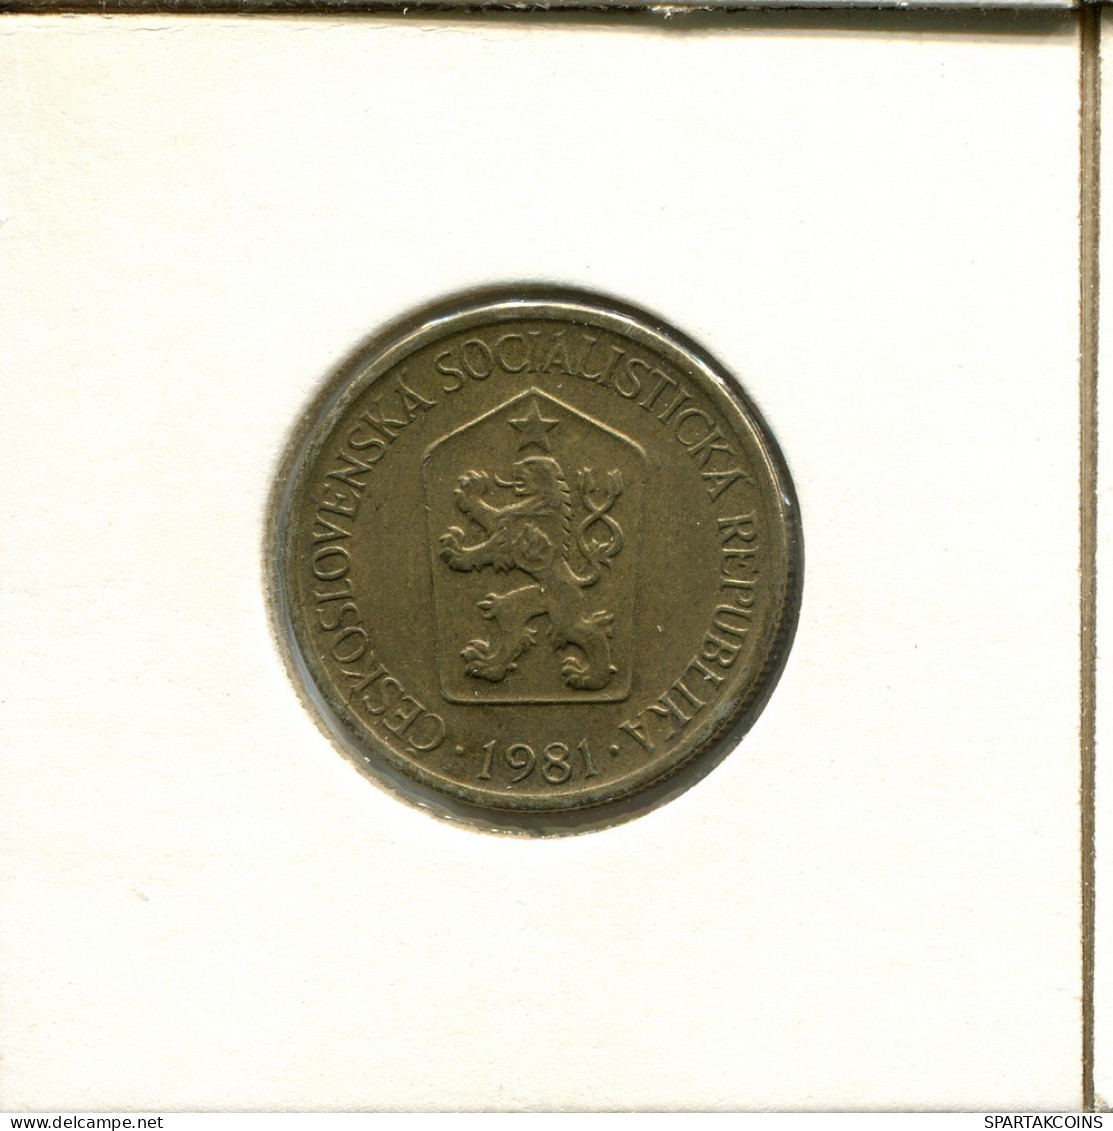 1 KORUNA 1981 CZECHOSLOVAKIA Coin #AS969.U.A - Cecoslovacchia